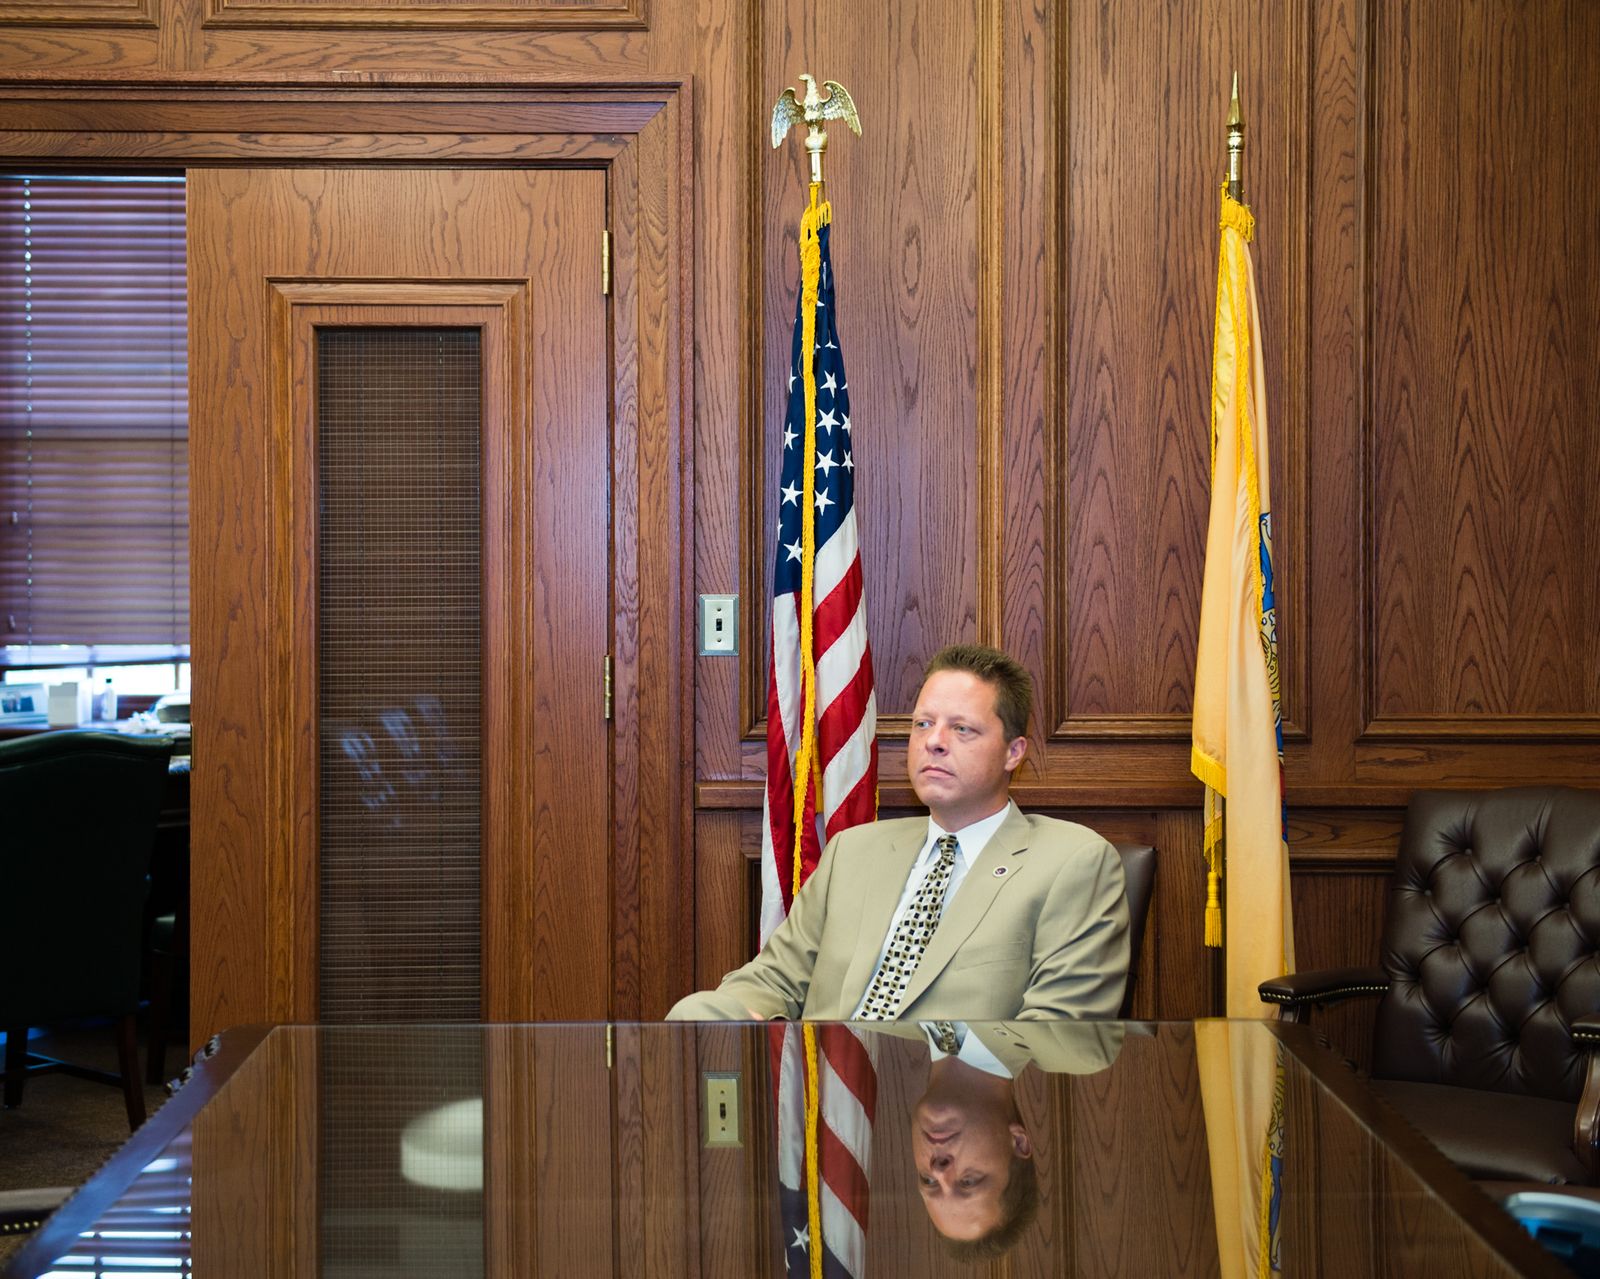 © Martin Toft - Daniel J. Rieman, Mayor of the Borough of Carteret, Mayor’s Office, Carteret, New Jersey, United States, 28 July 2014